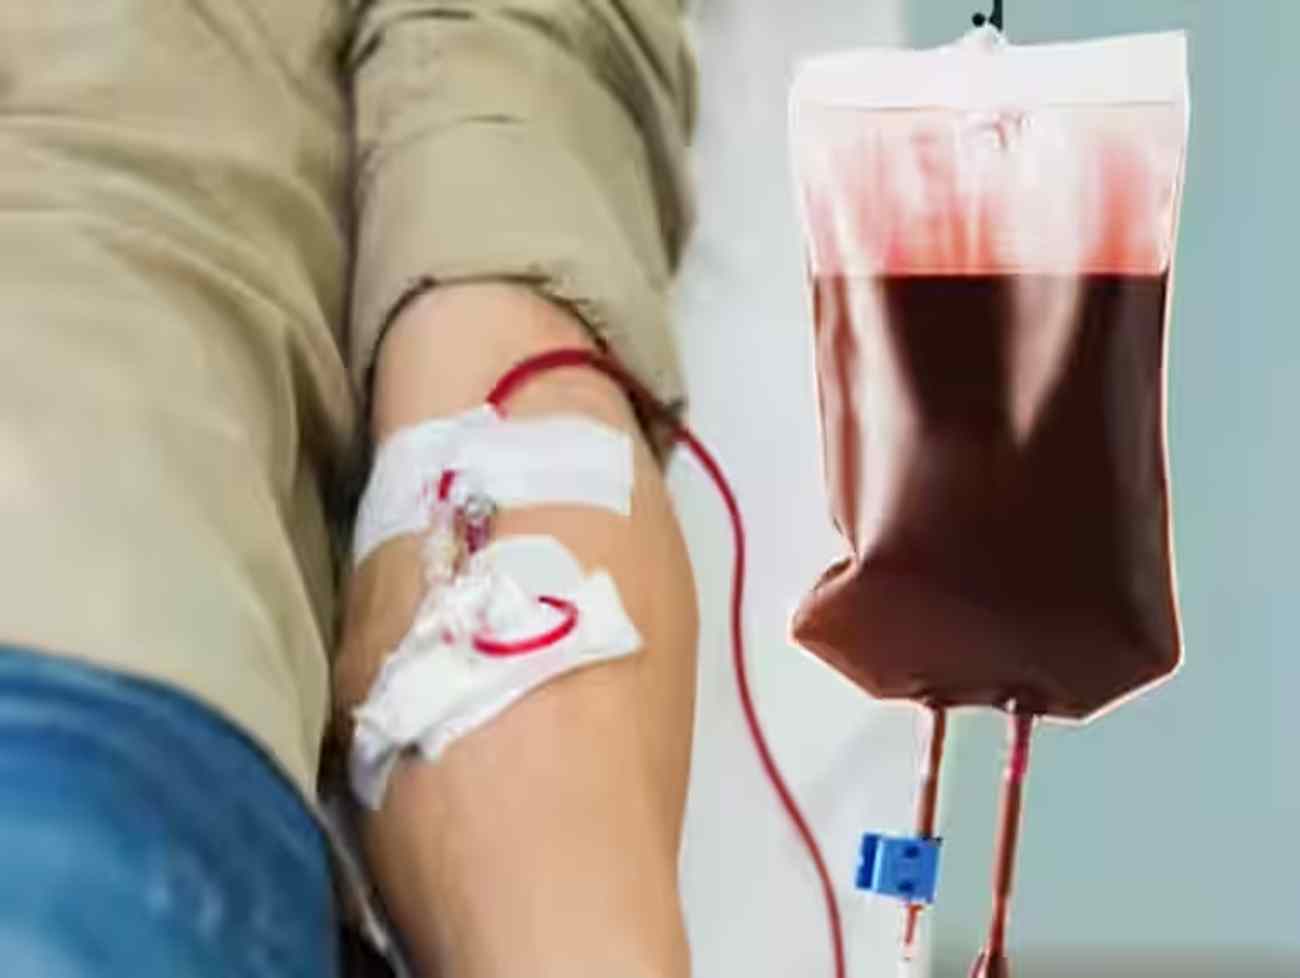 World Blood Donor Day: એક વર્ષમાં કેટલું લોહી ડોનેટ કરી શકો છો તમે?